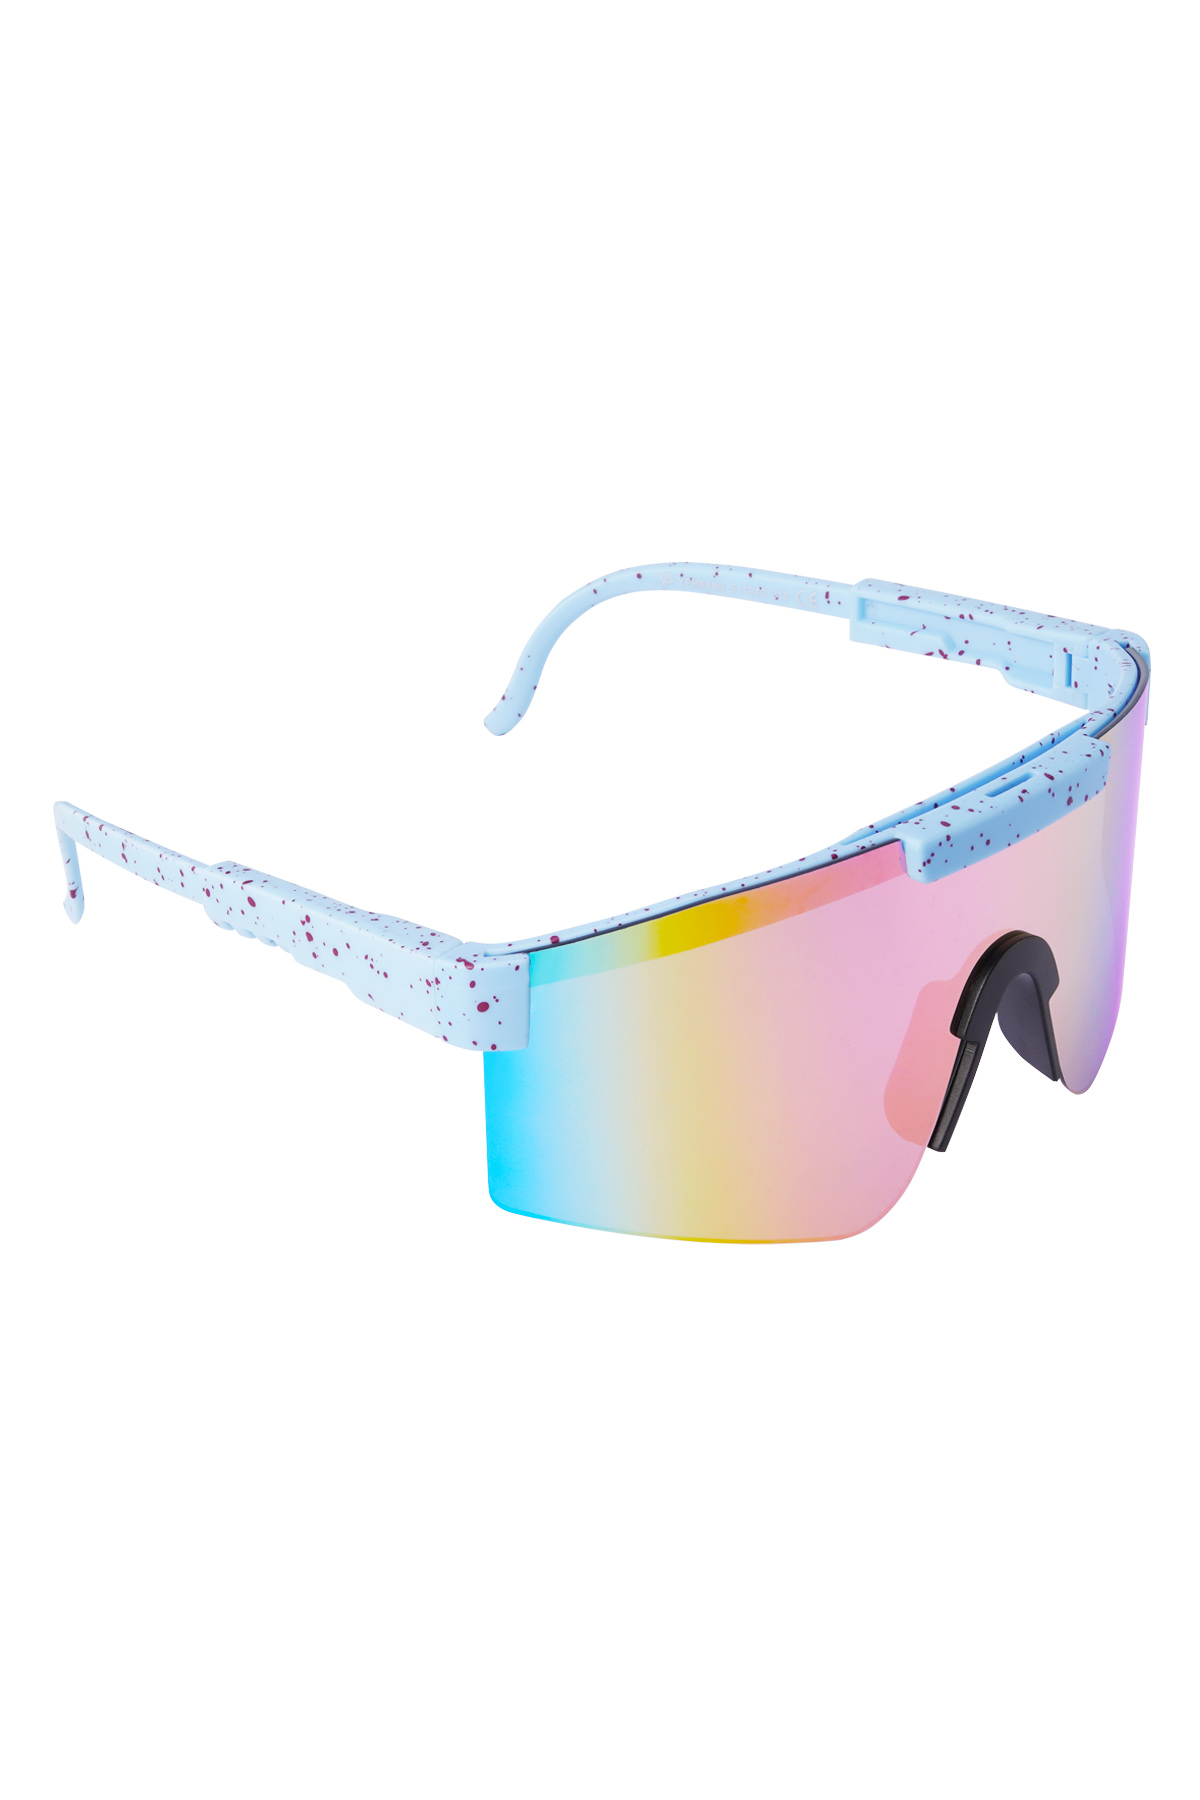 Sunglasses print colored lenses - blue h5 